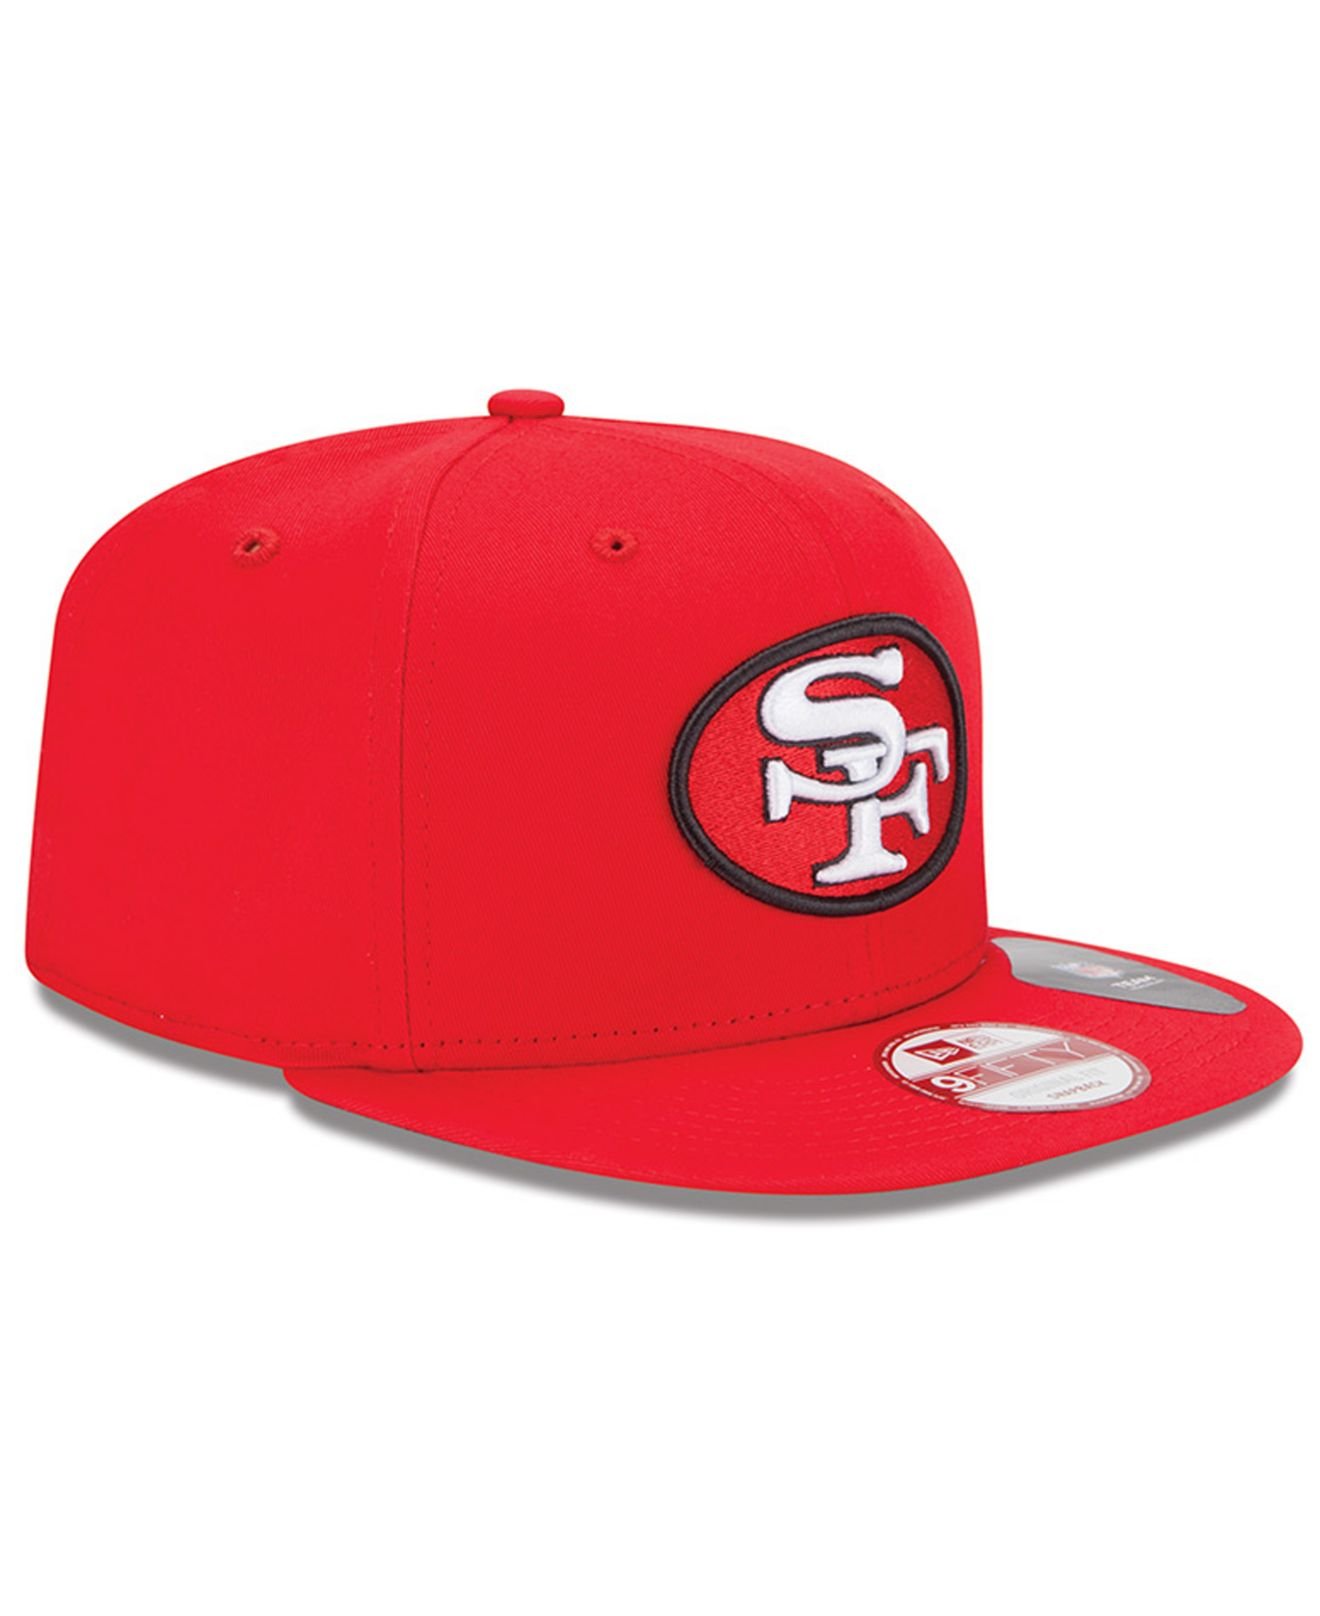 New Era 9Fifty Baycik Snapback - San Francisco 49ers/Red - New Star